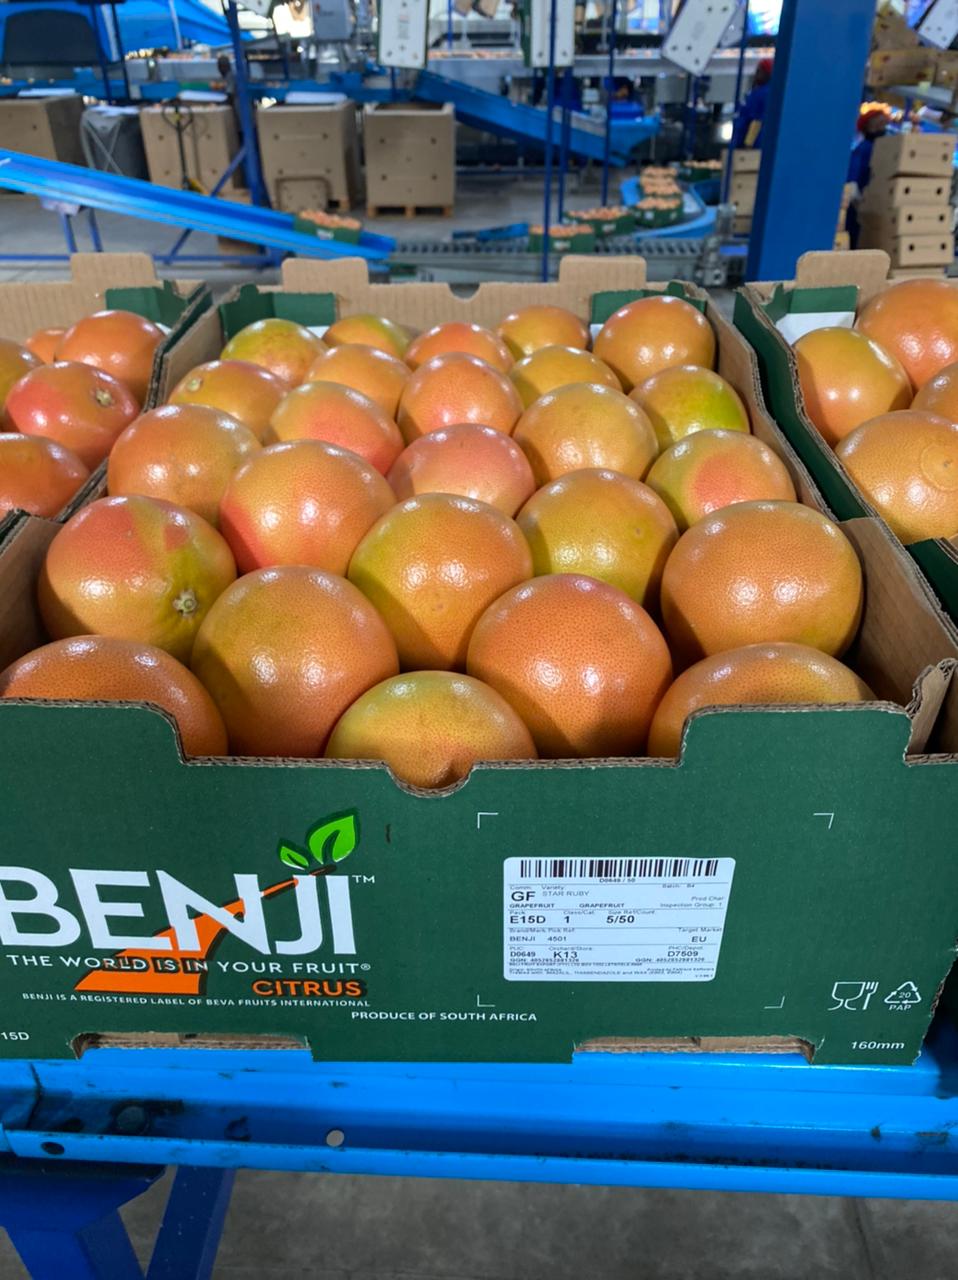 Grapefruit of type Star Ruby, packed by Benji - Beva Fruits International (BFI)